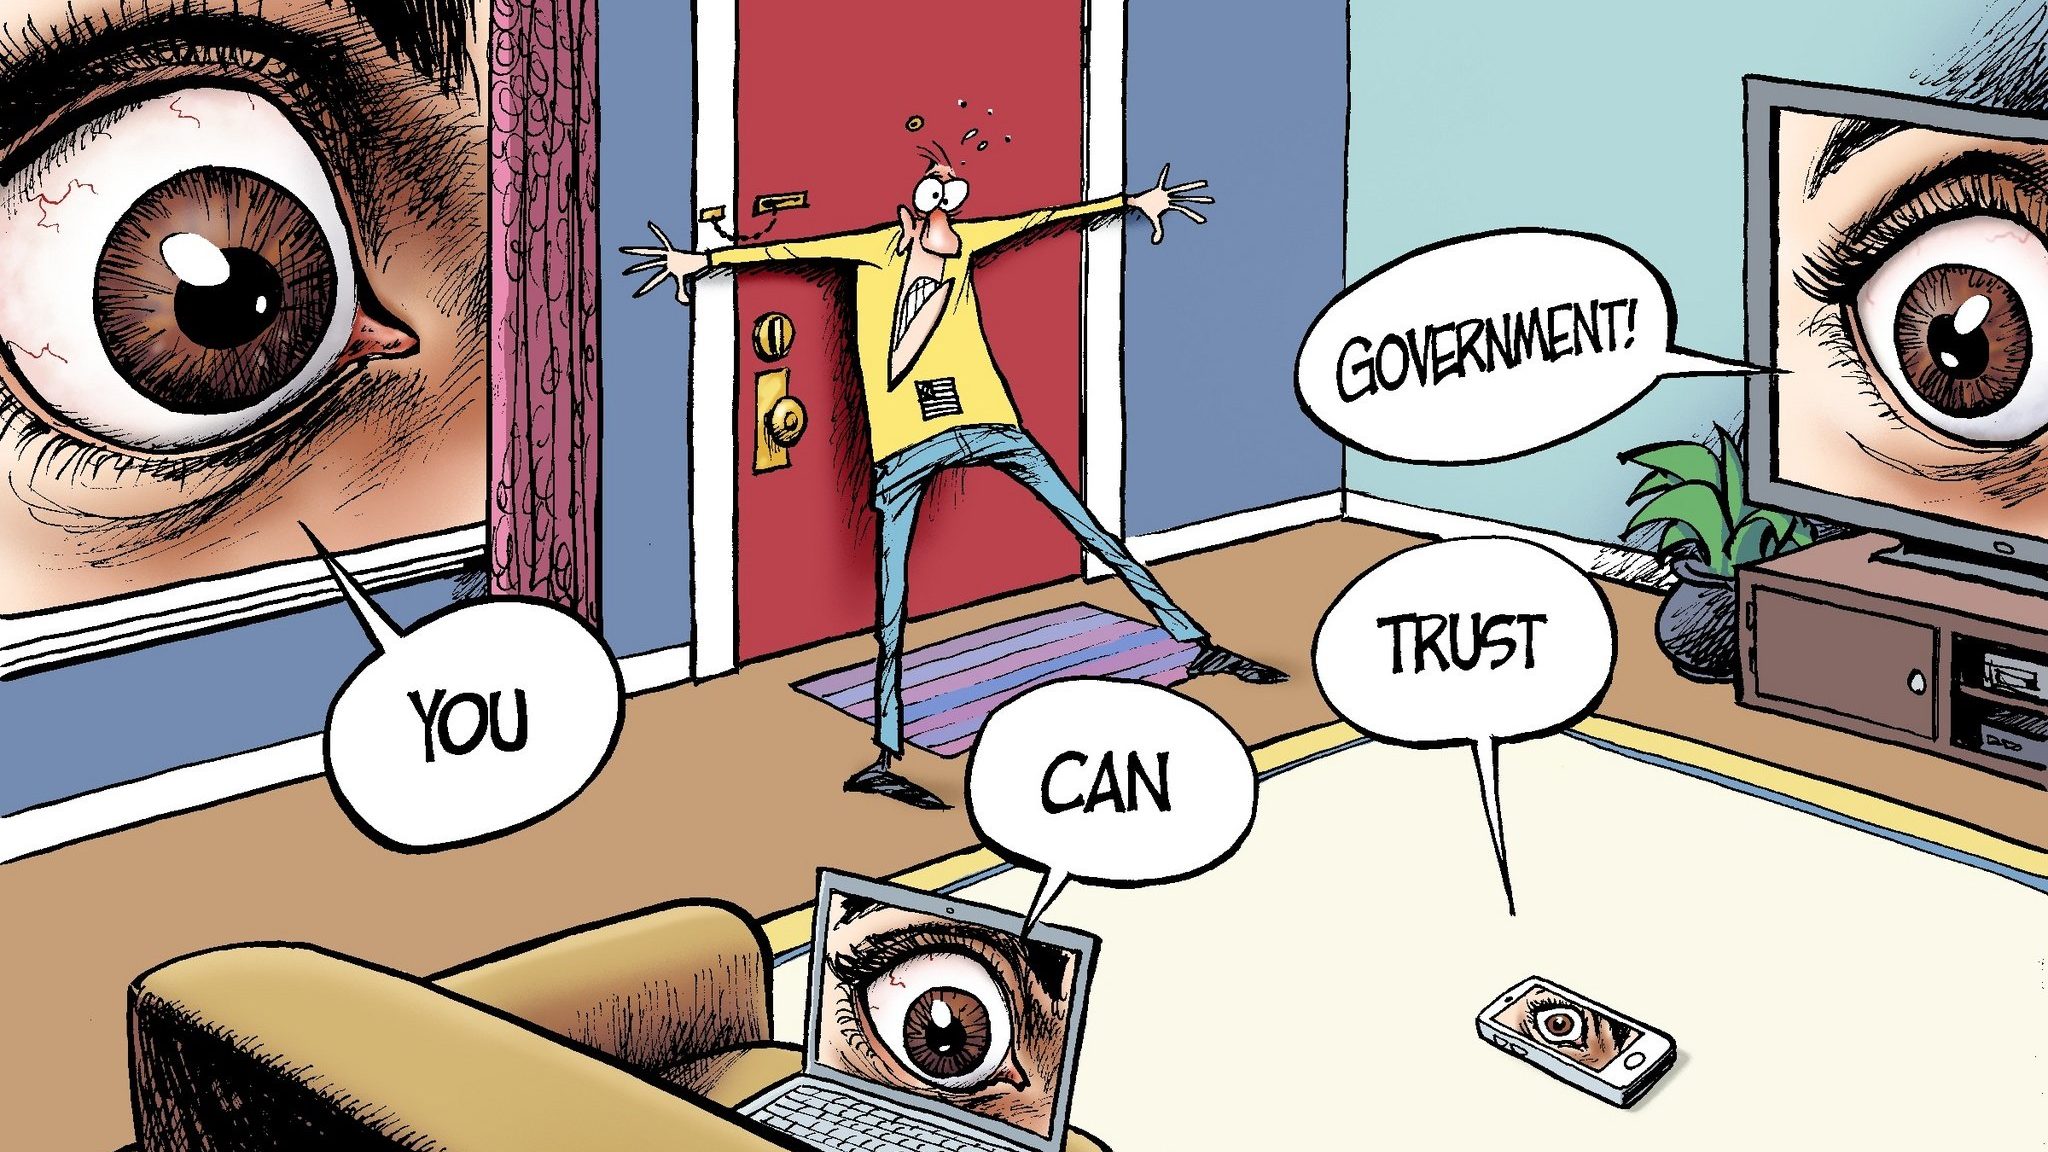 government-you-can-trust-cartoonjpg-012837c18148b951-e1508703581813.jpg